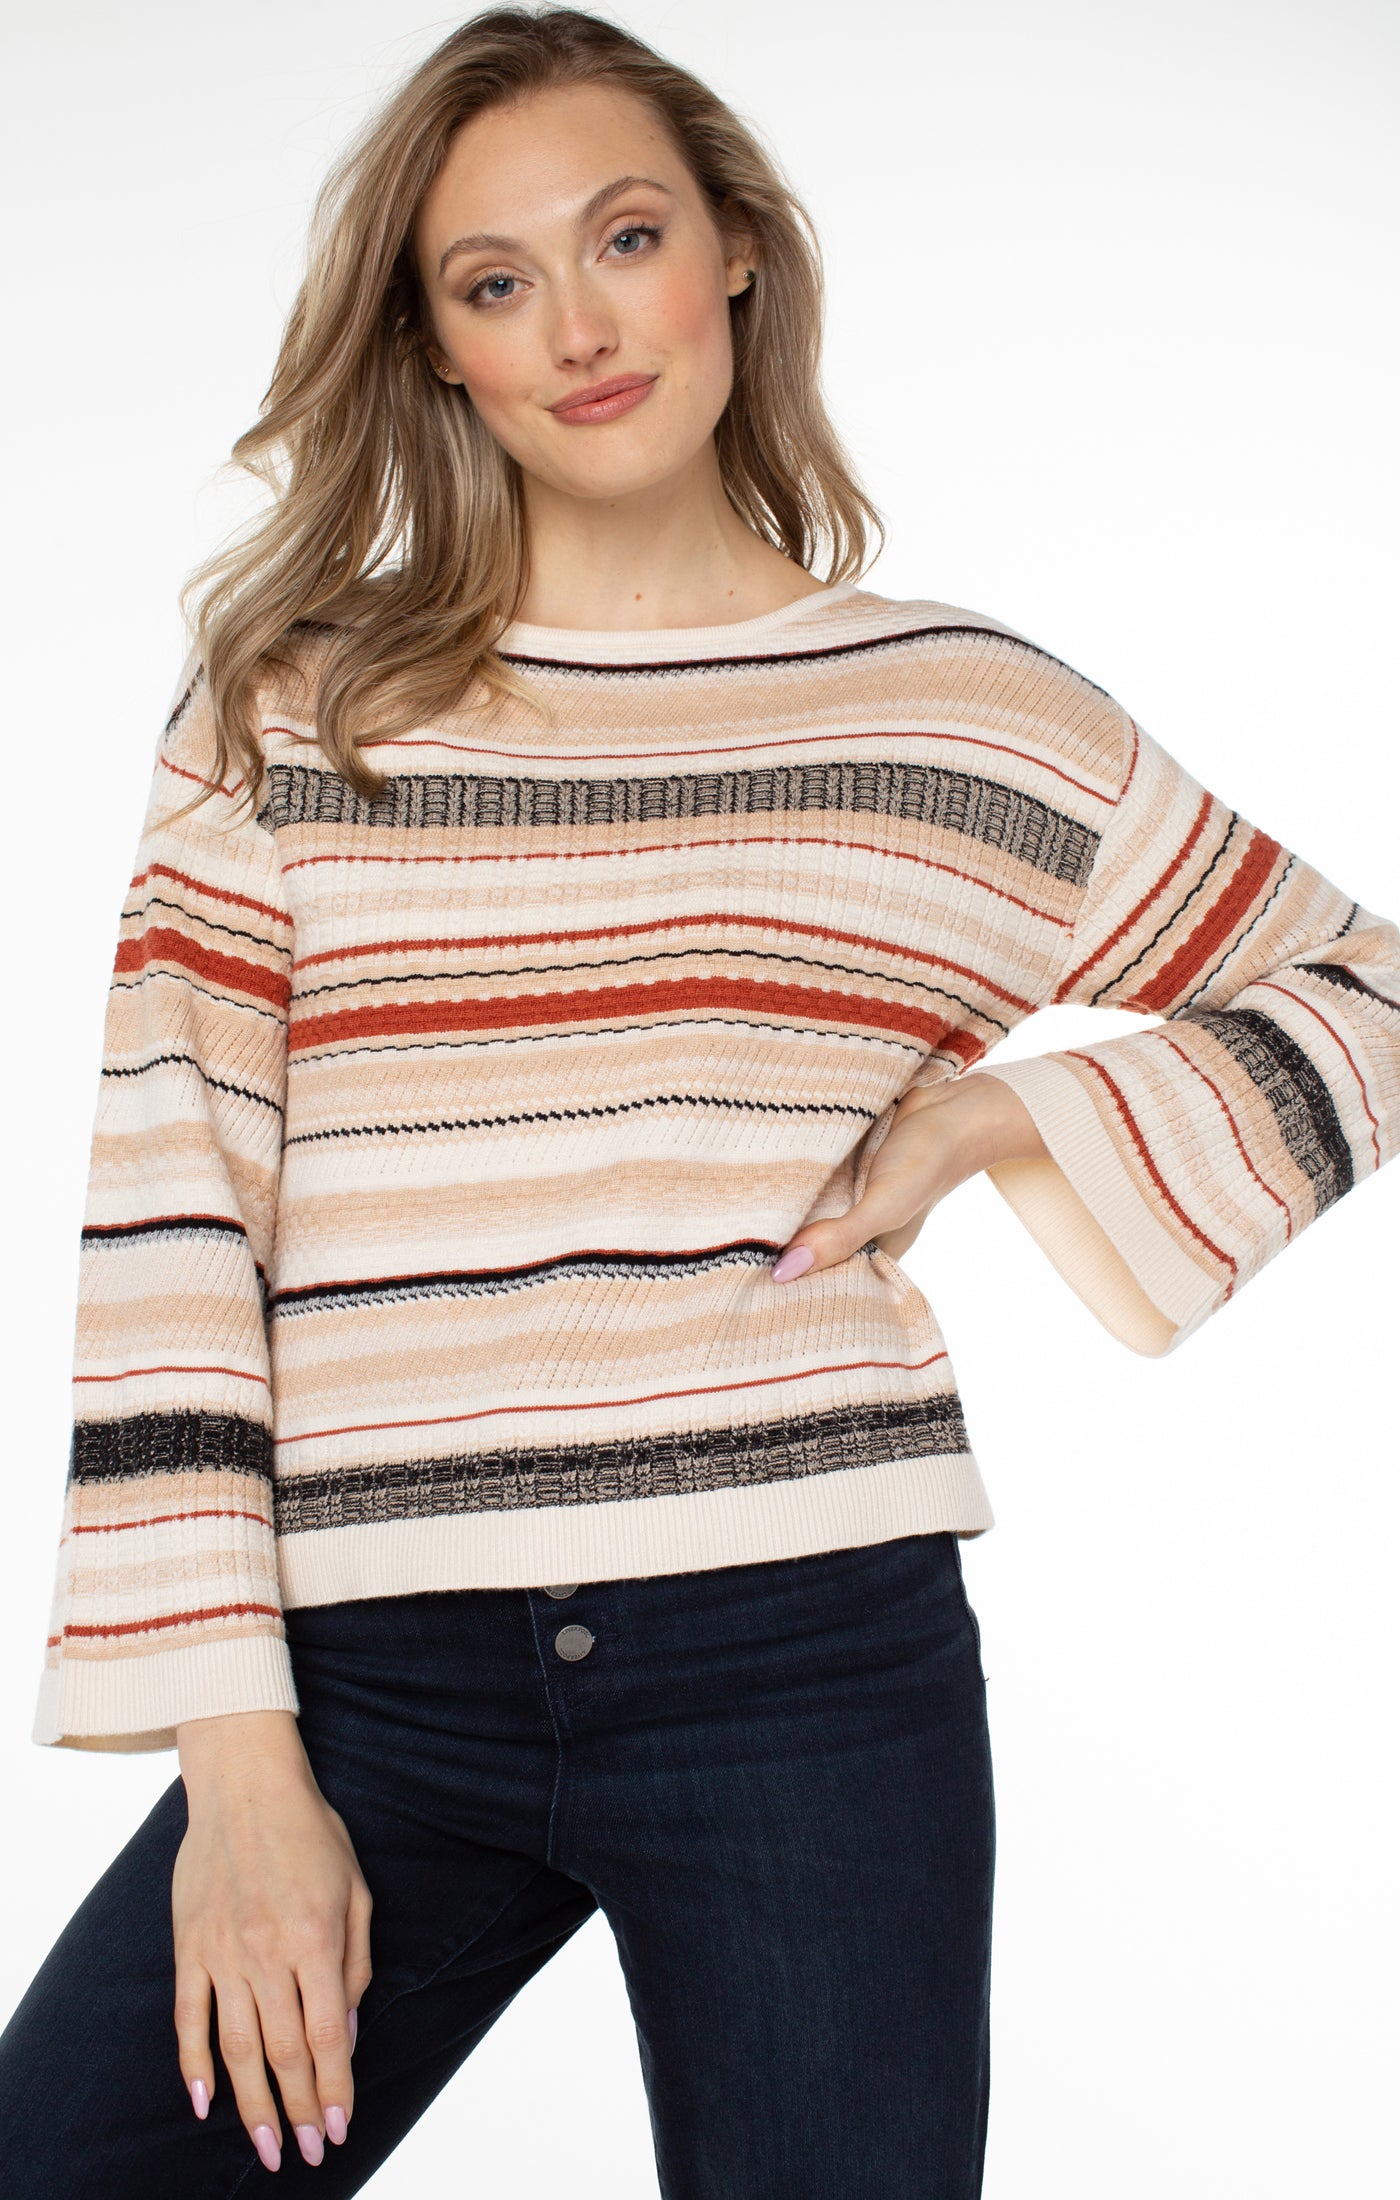 LPLA Boatneck Striped Sweater. XLARGE